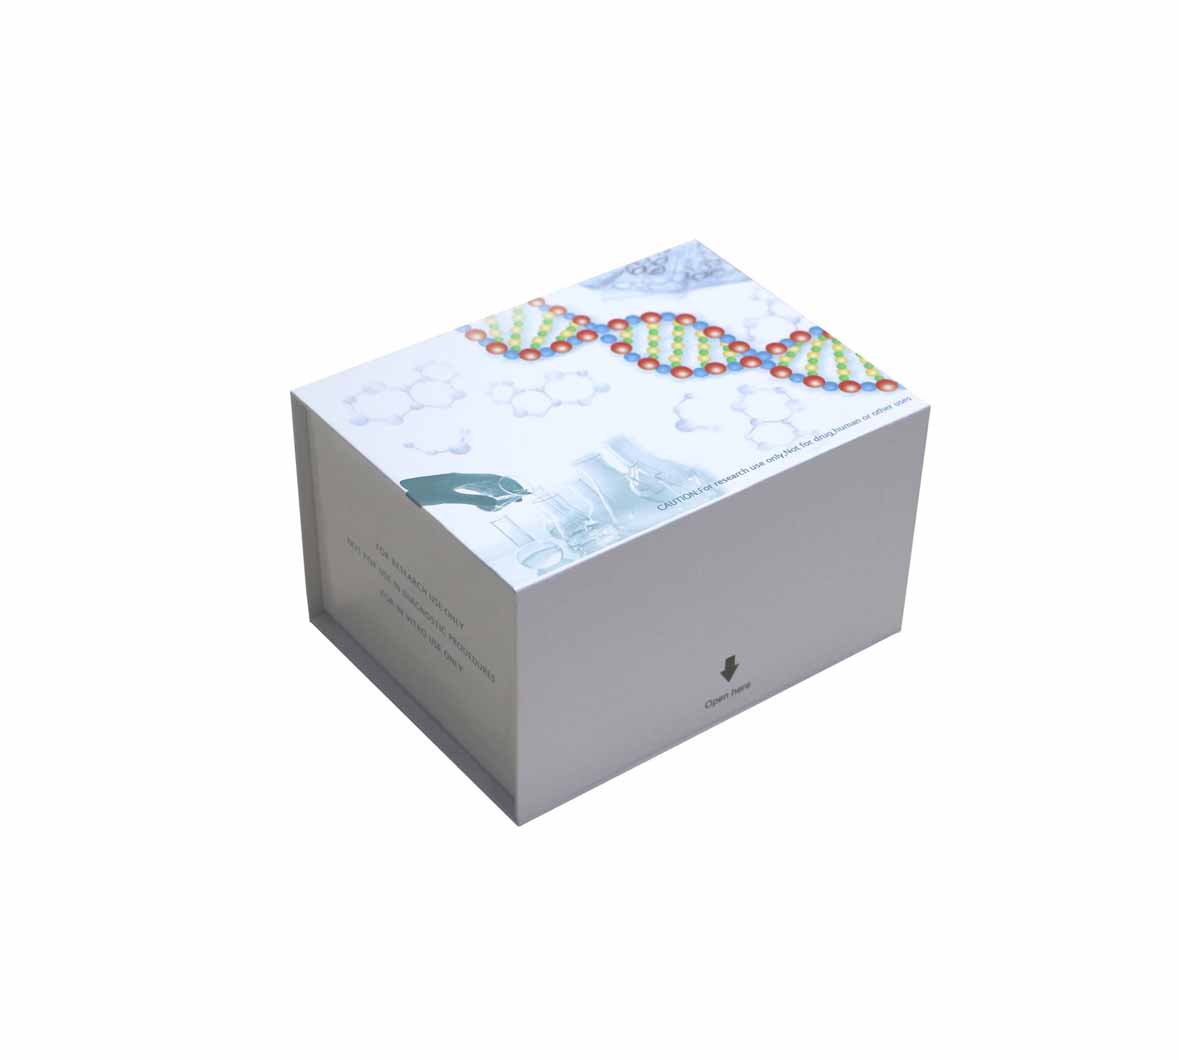 猴雄激素(androgen)ELISA测定试剂盒